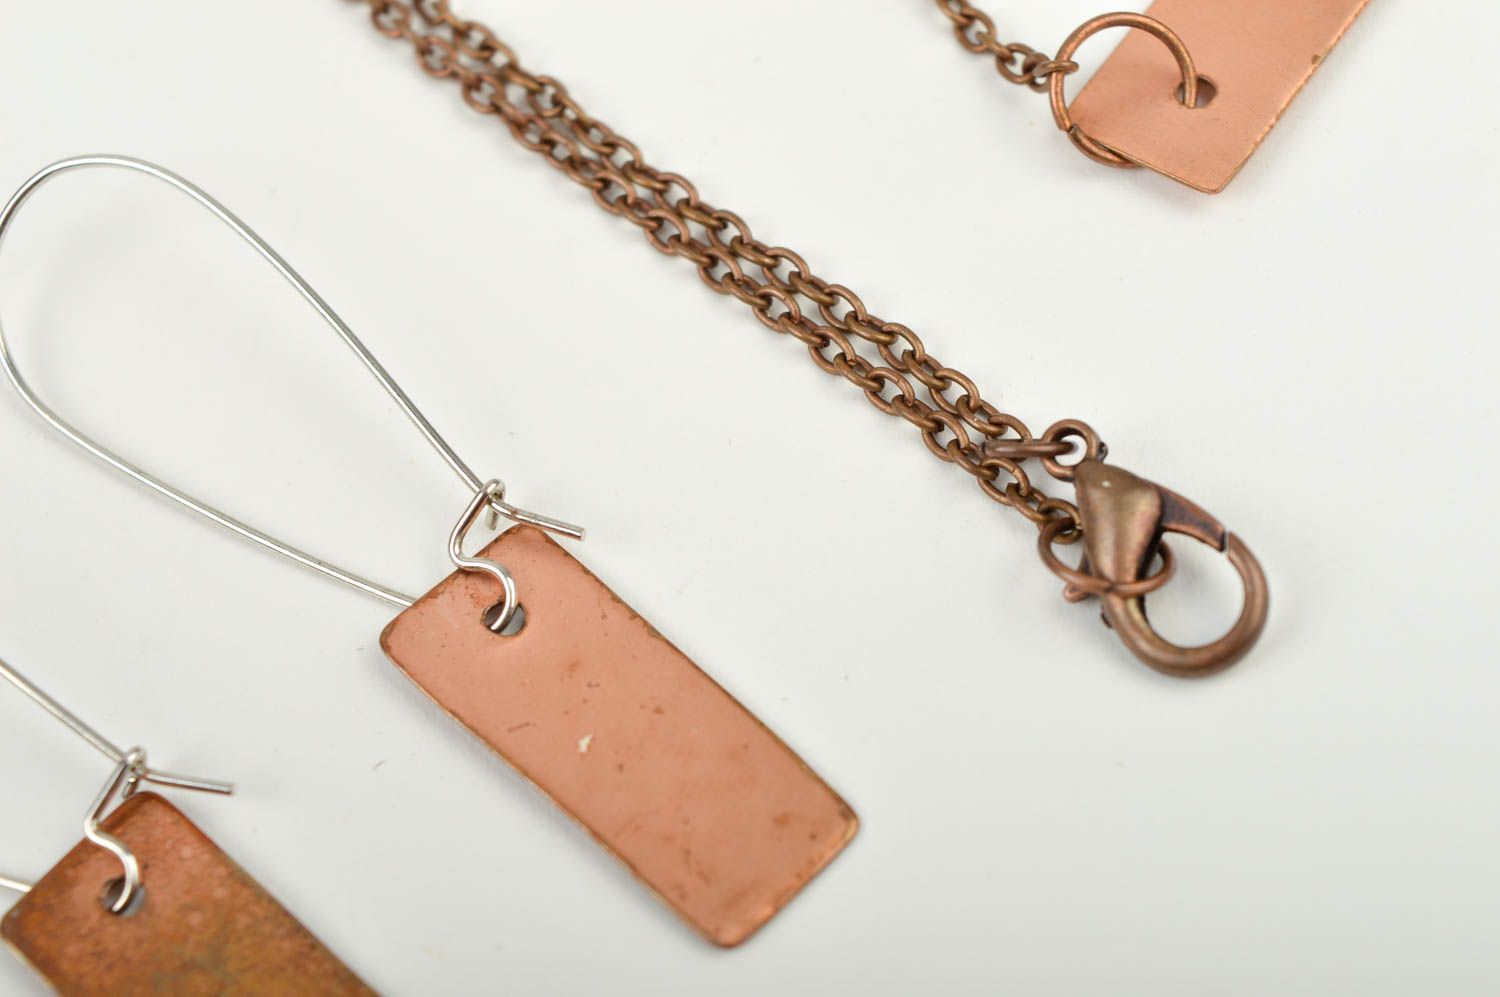 Handmade forged copper jewelry designer metal pendant dangling earrings photo 3